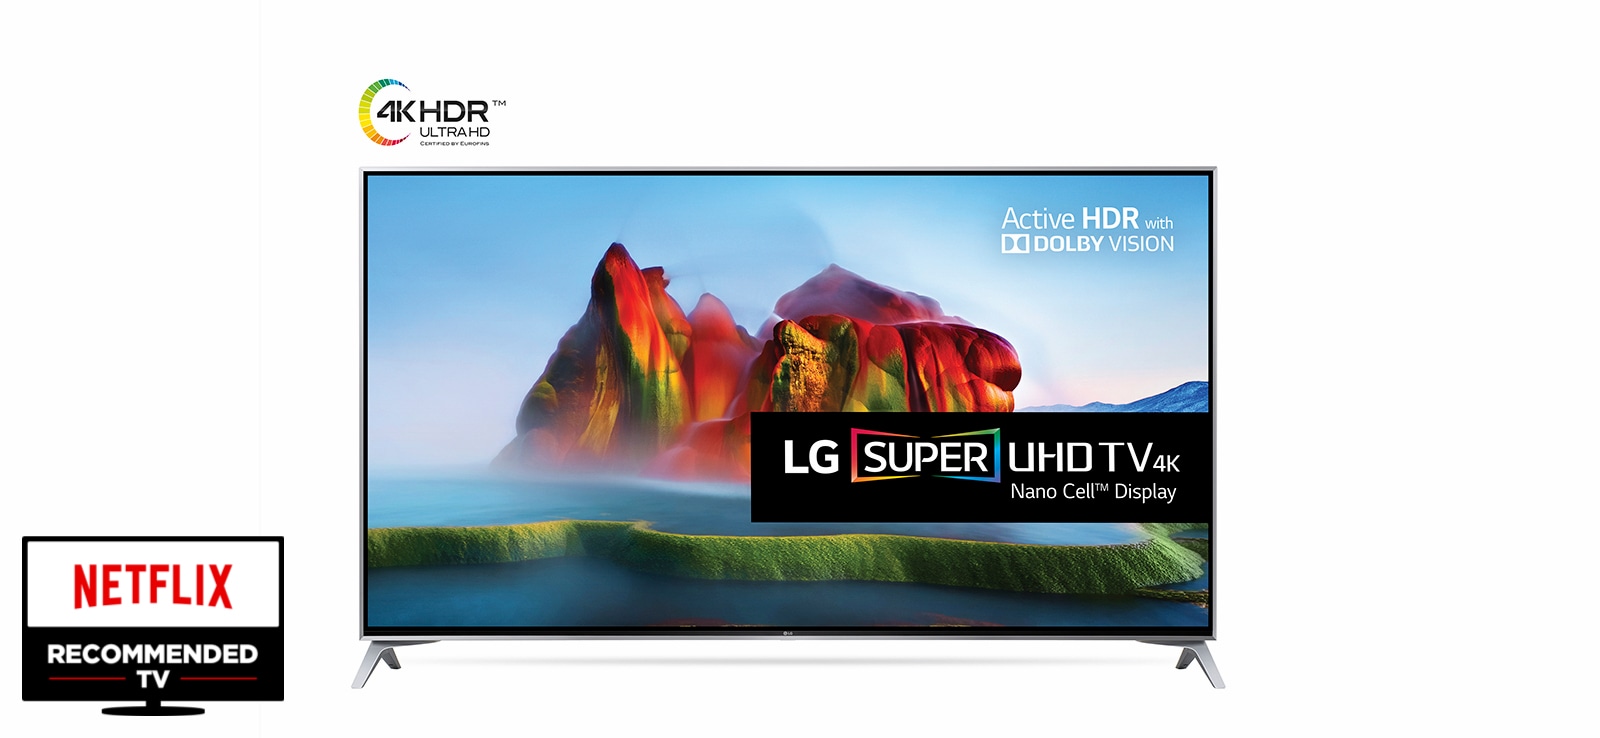 LG 60'' (152 cm) SUPER Ultra HD televizor s IPS 4K Nano Cell™ Display zaslonom, Active HDR - Dolby Vision tehnologijom, webOS 3.5 i harman/kardon®audio sustavom, 60SJ800V, thumbnail 7